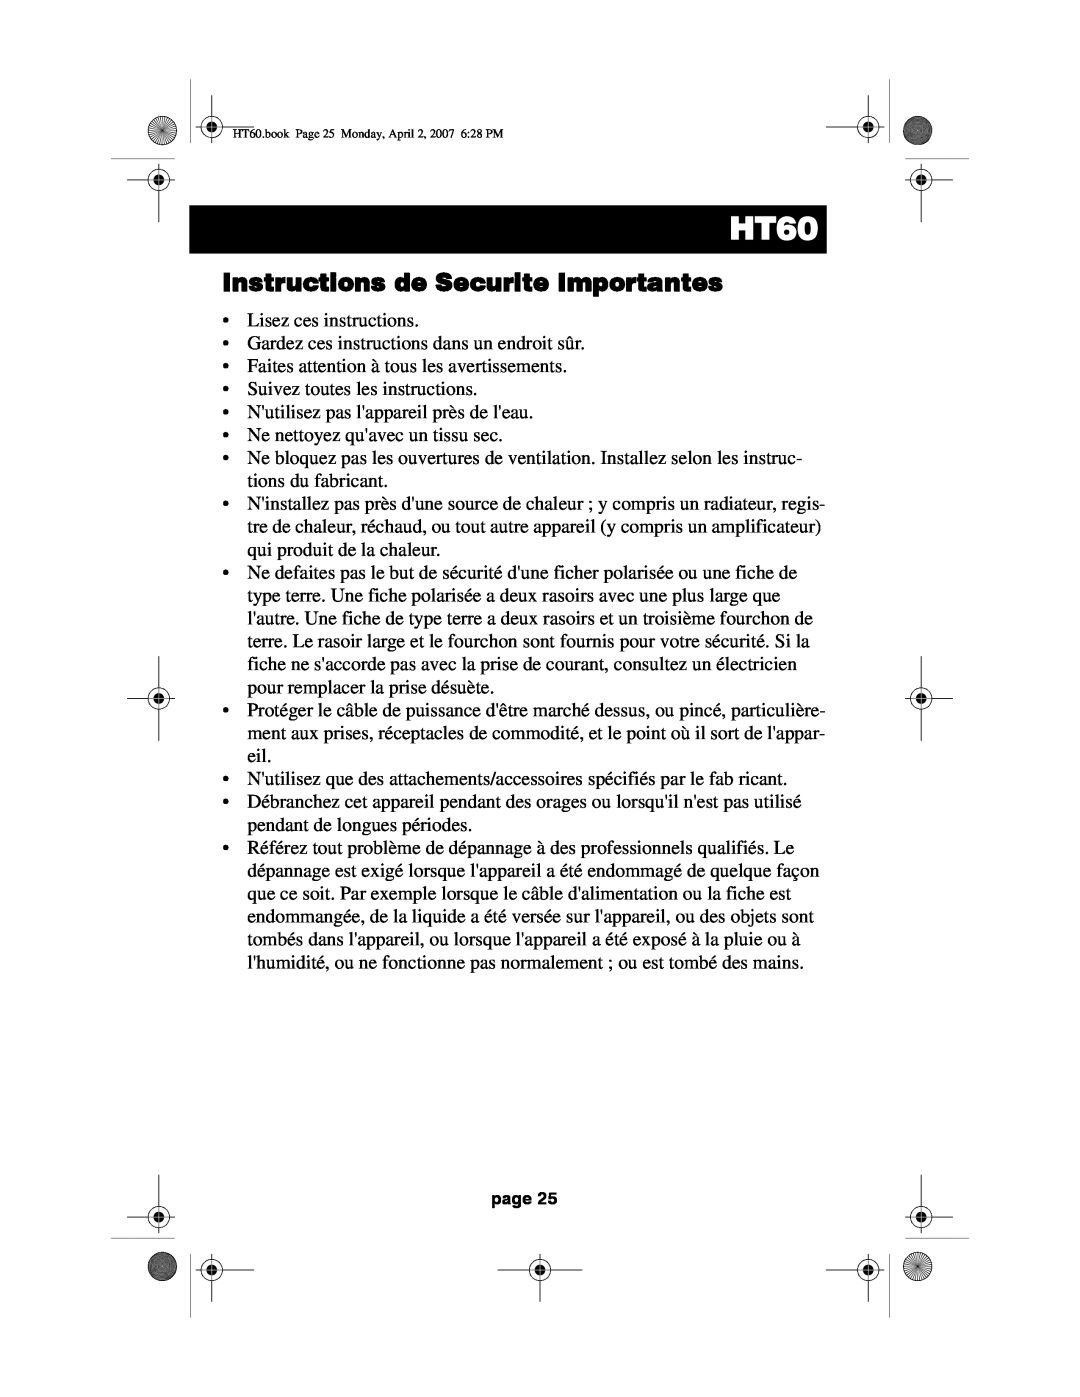 Acoustic Research HT60 operation manual Instructions de Securite Importantes 